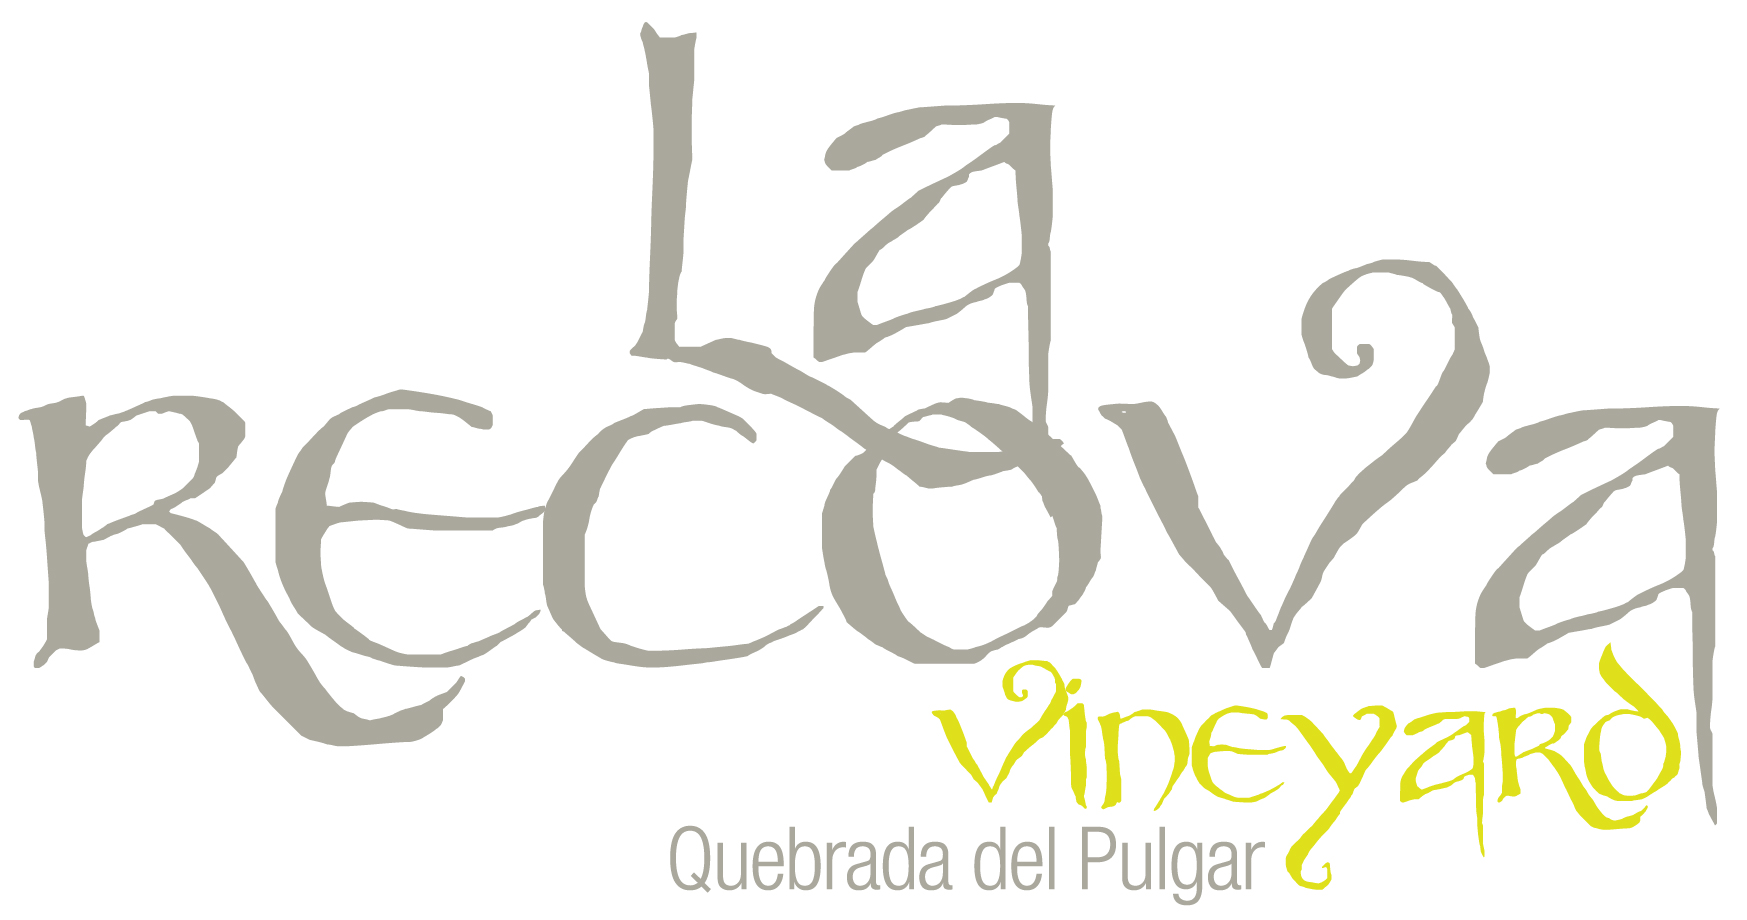 La Recova Logo